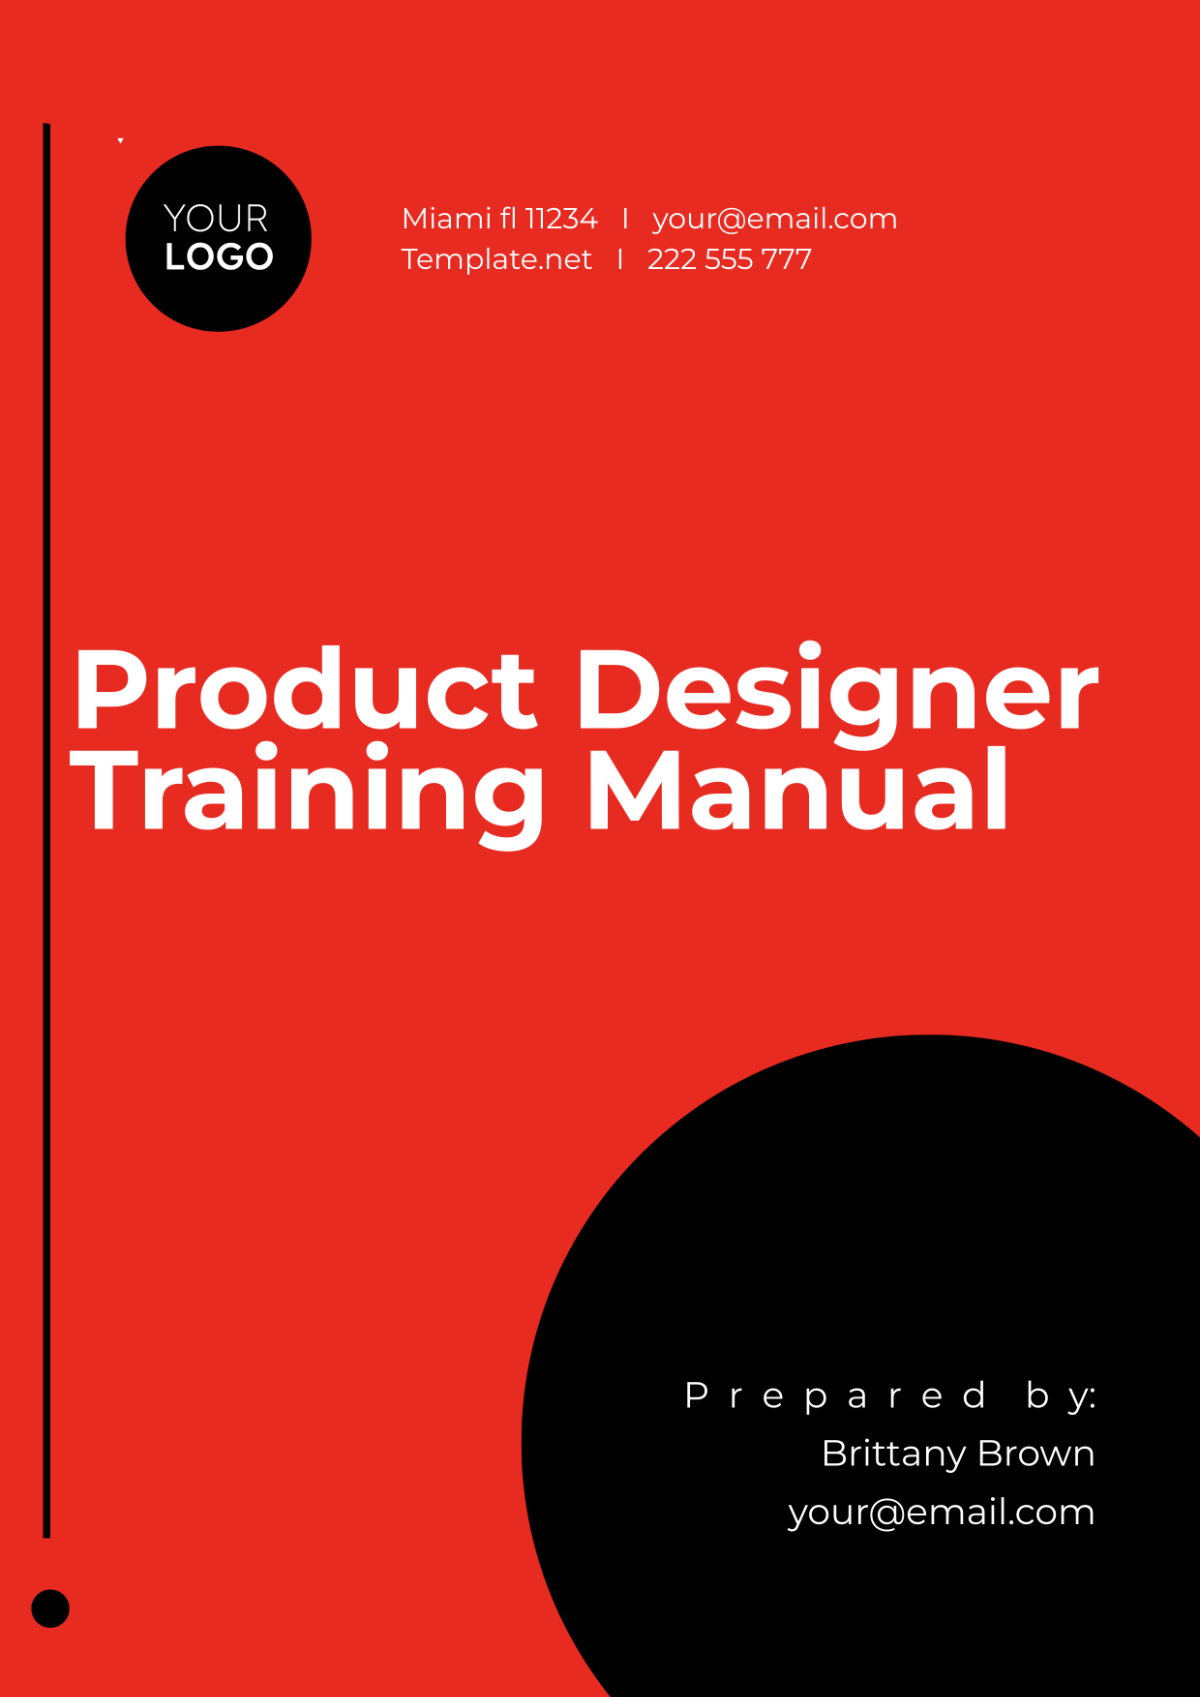 Product Designer Training Manual Template